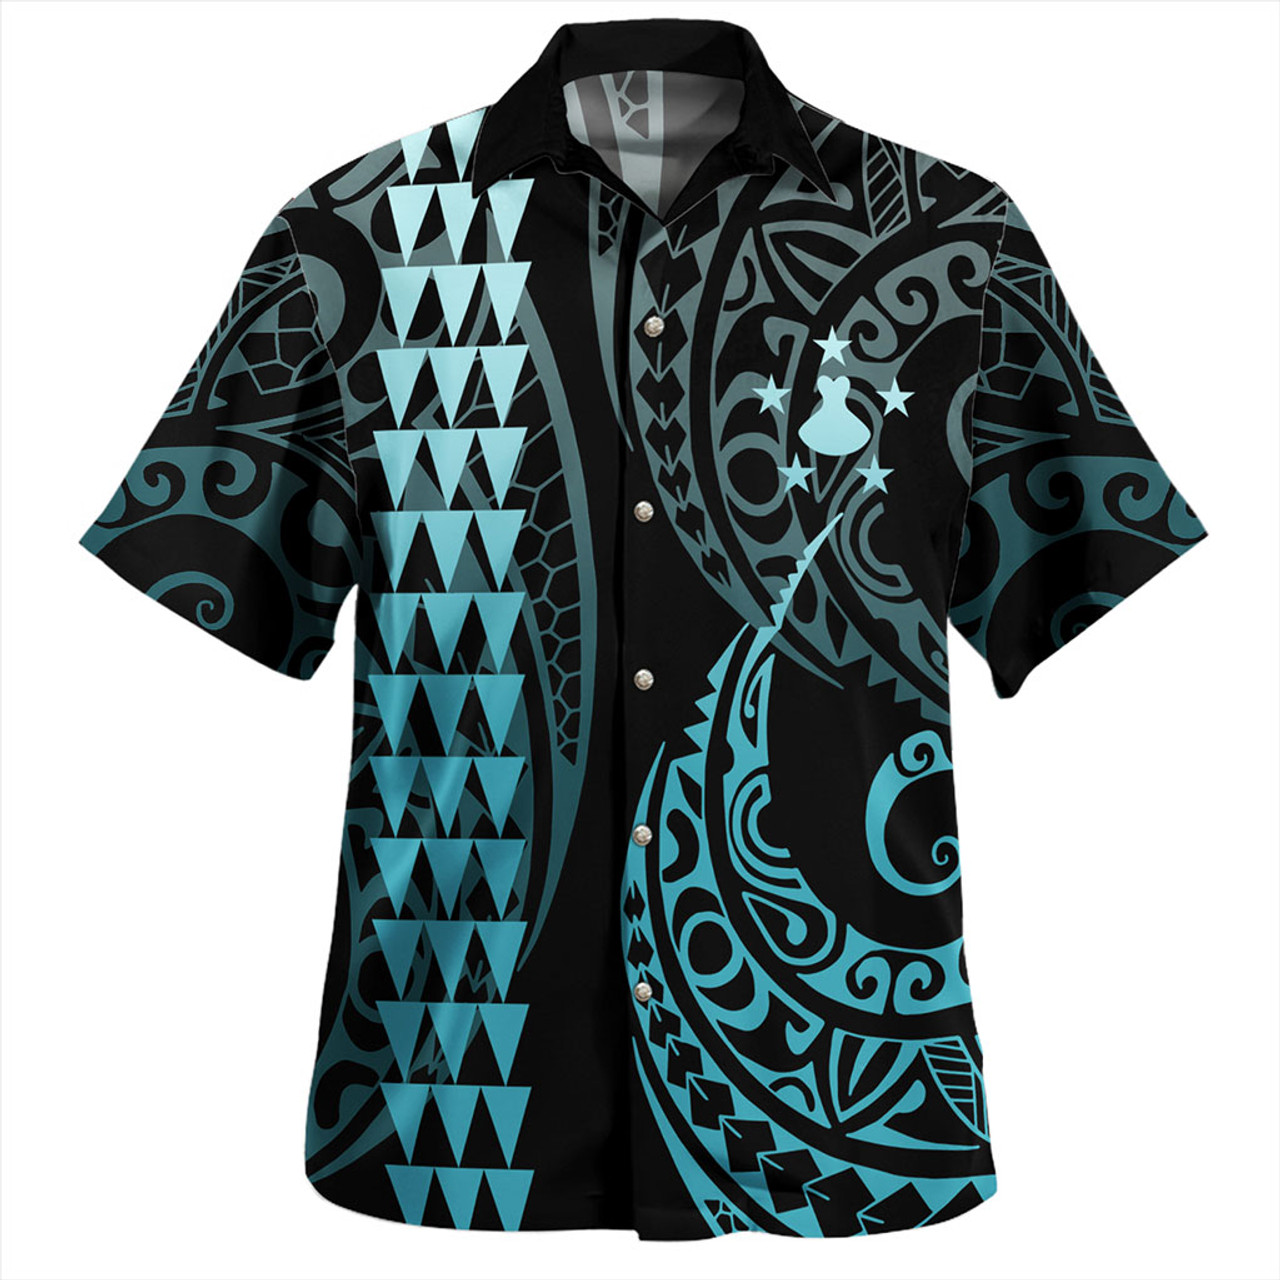 Austral Islands Combo Dress And Shirt Kakau Style Turquoise